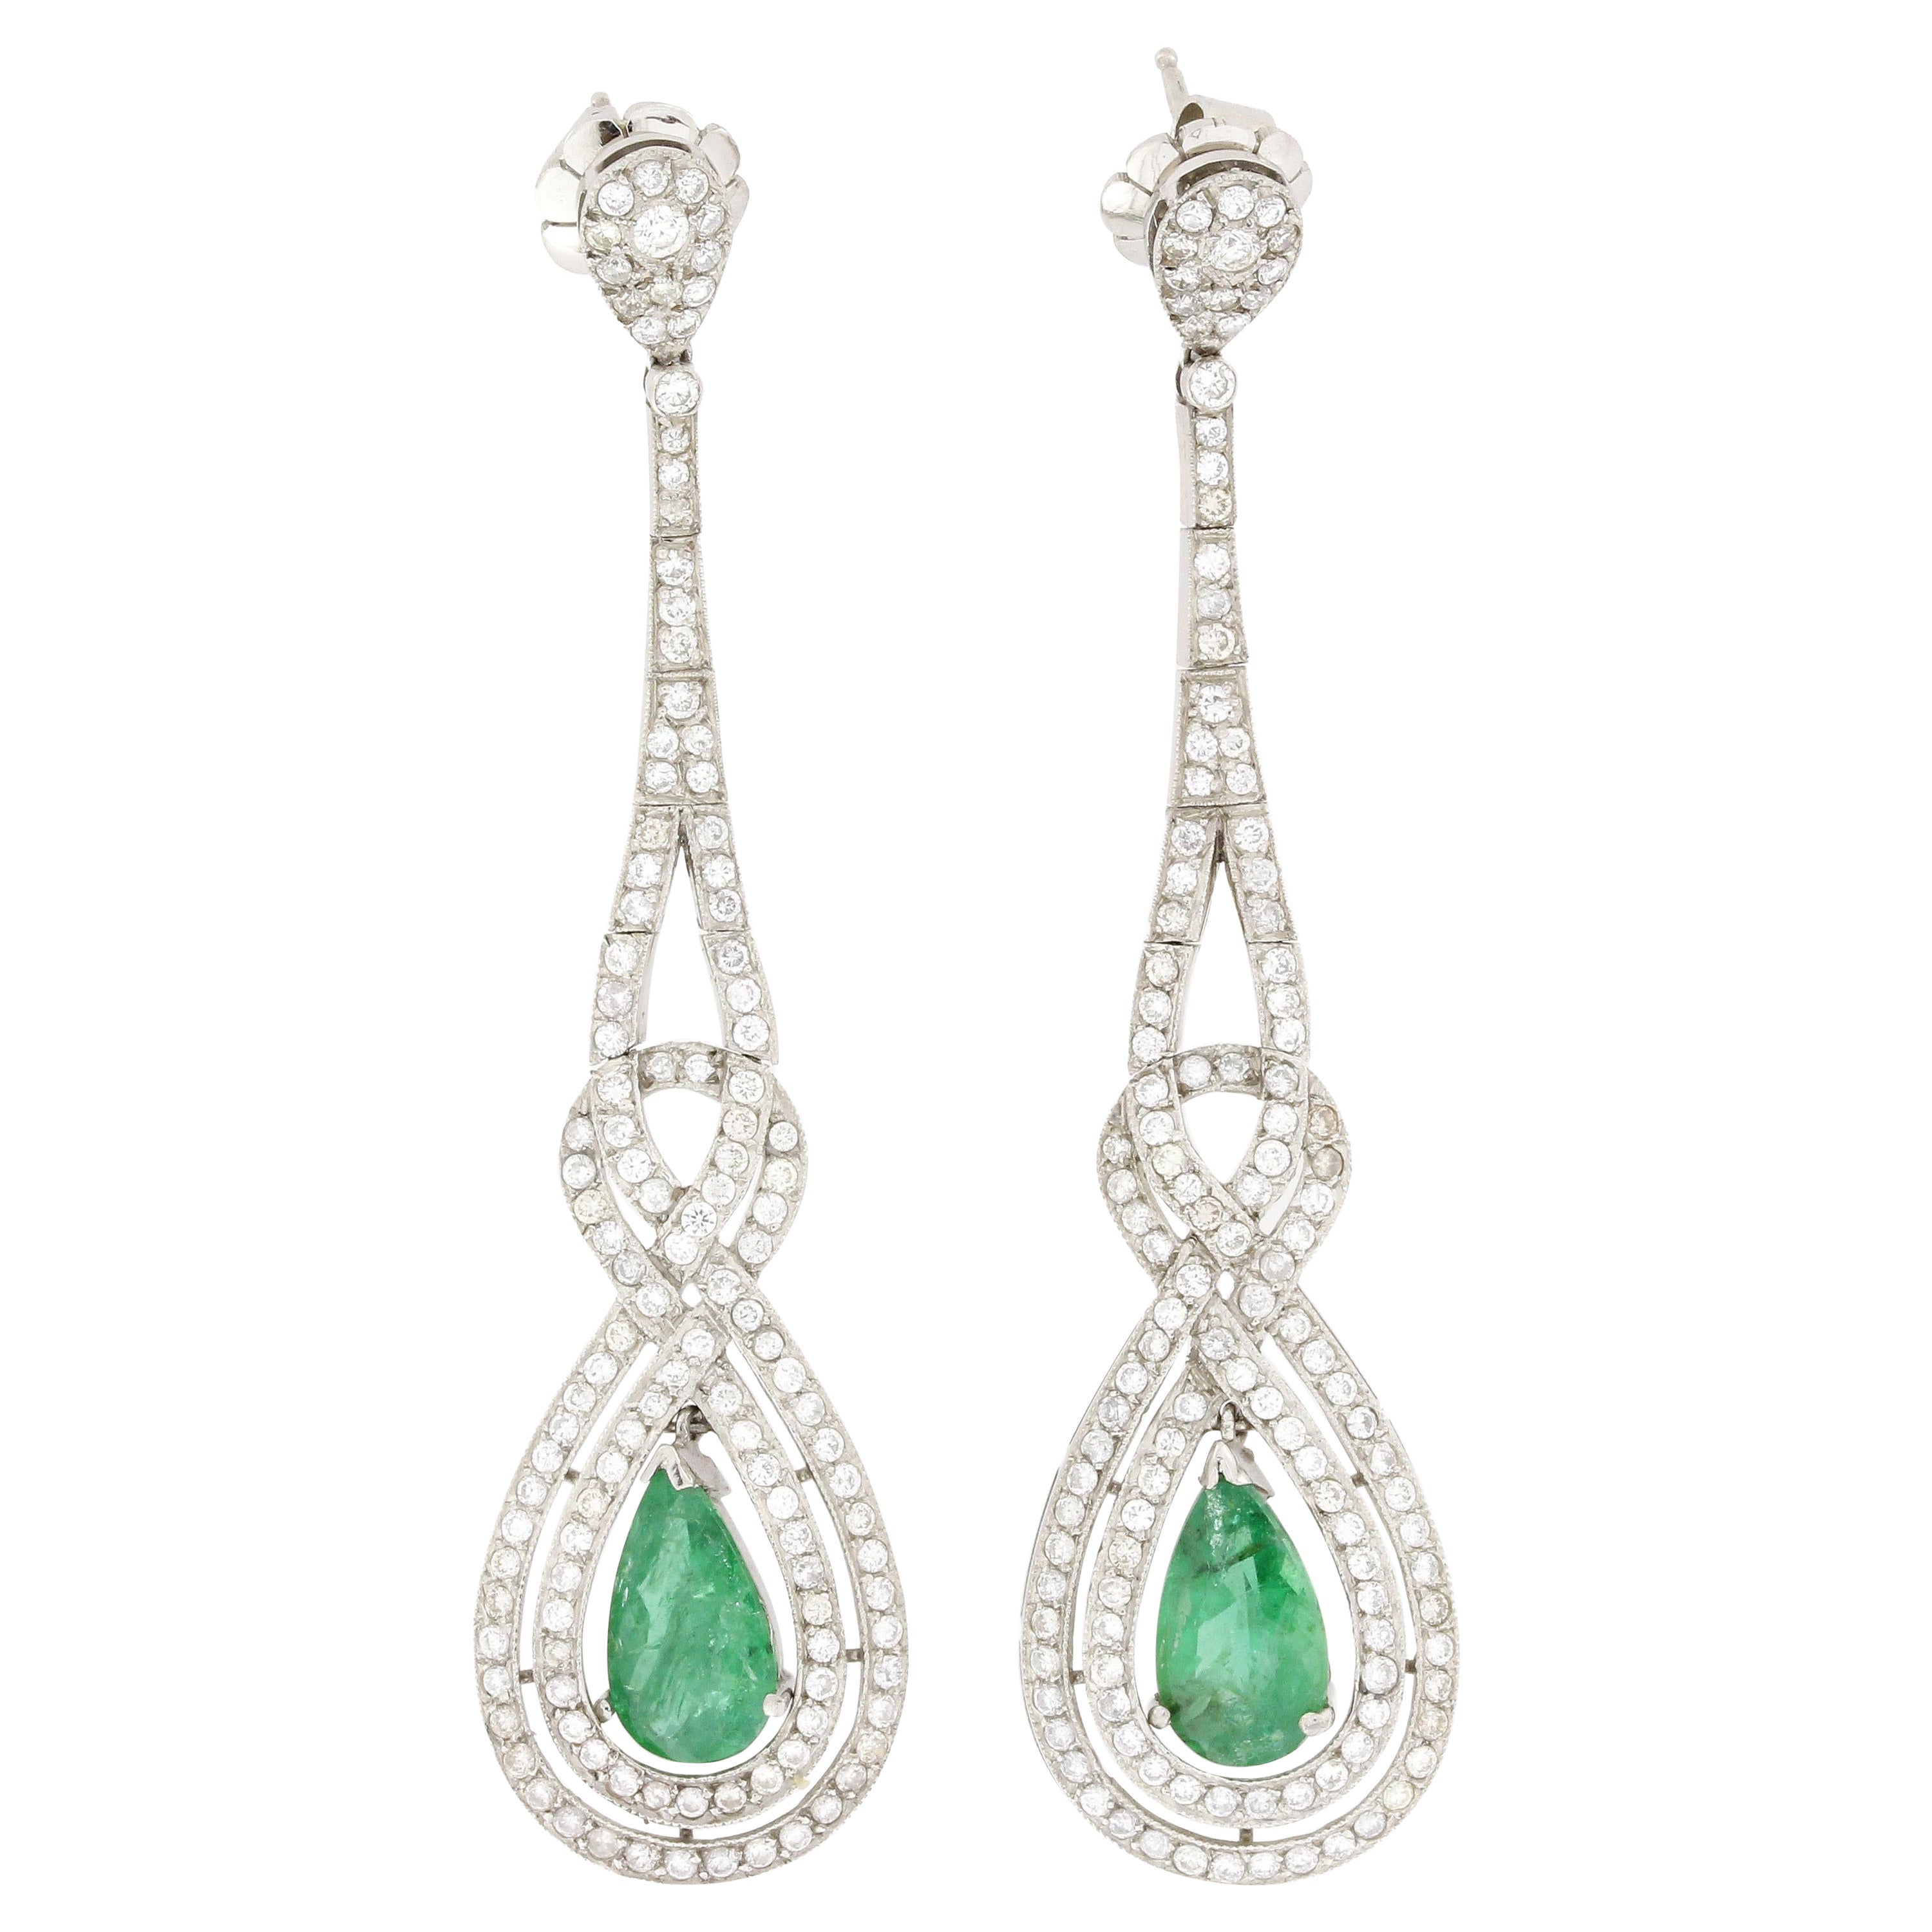 Antique Style 3.0 Carat Pear Cut Emerald Diamond Drop Earrings For Sale